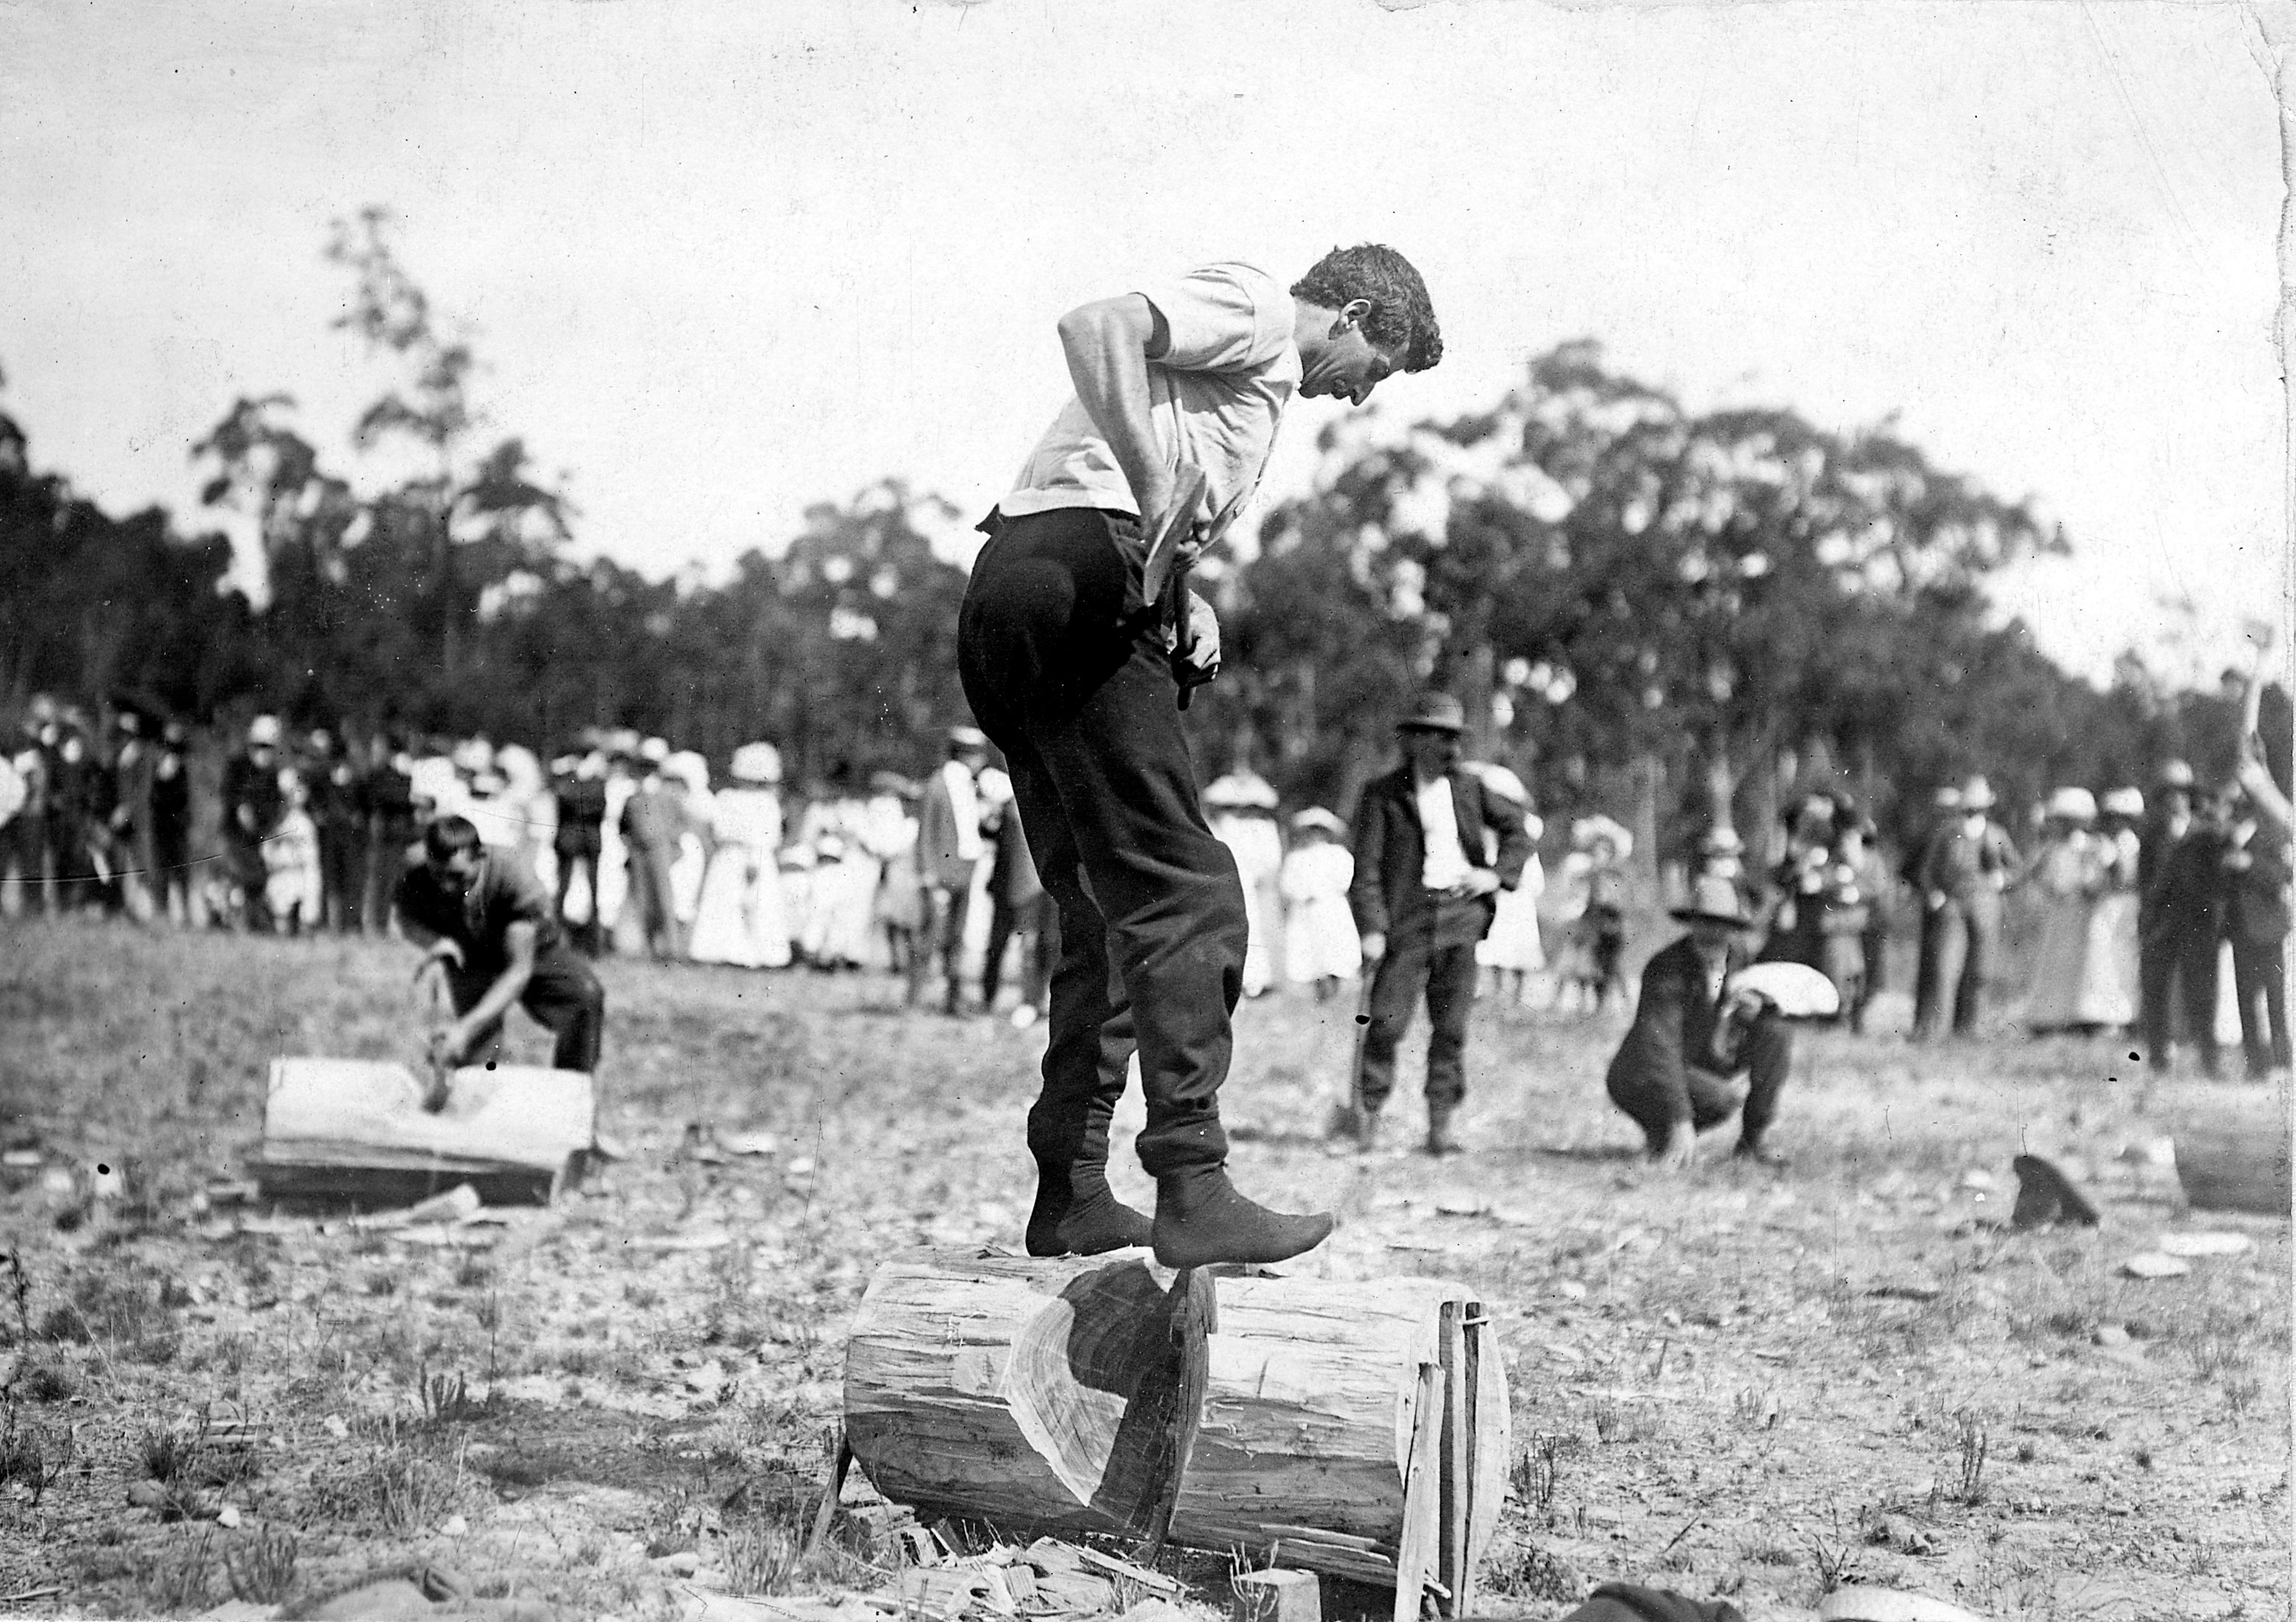  Athleten bei einem frühen Sportholzfäller-Wettkampf in Australien.